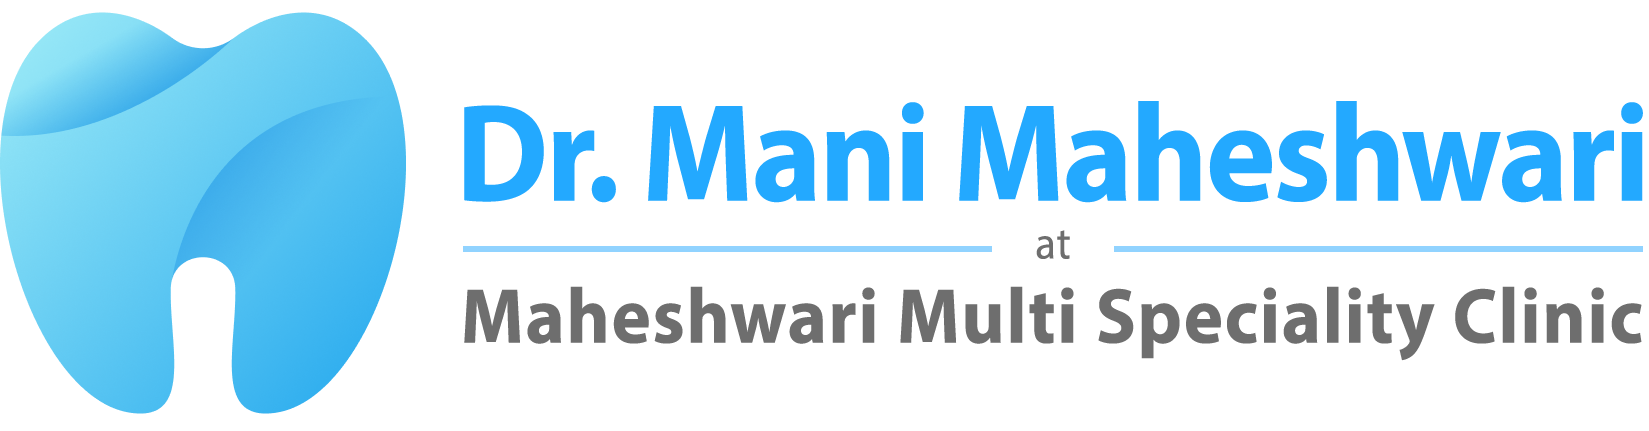 Dr.Mani Maheshwari|Clinics|Medical Services